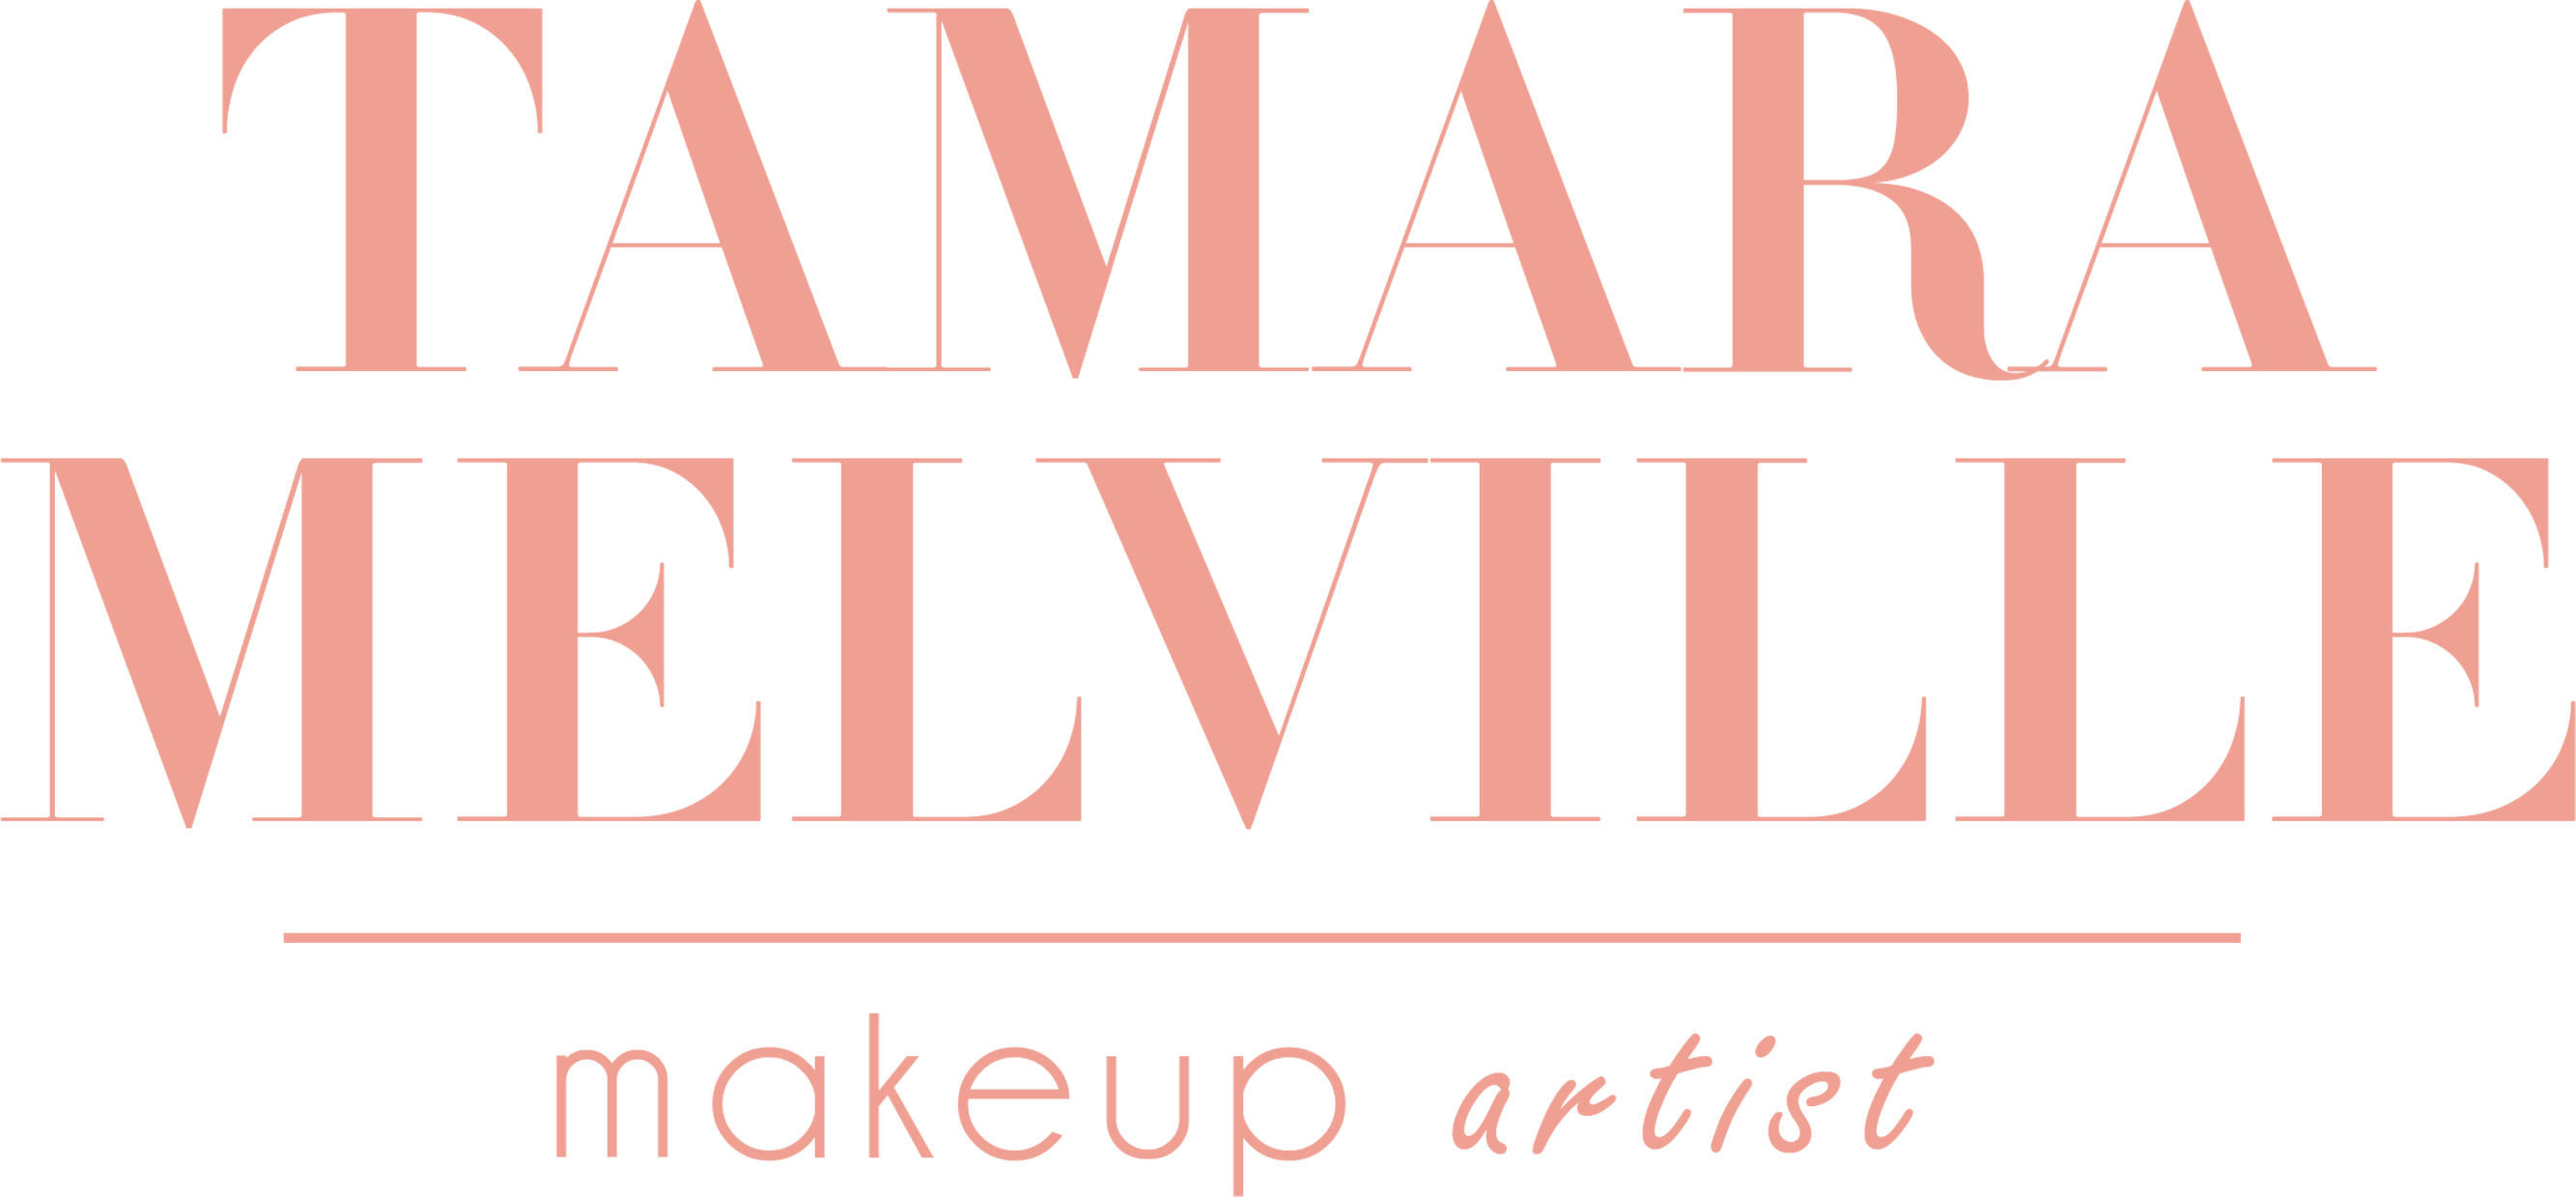 Tamara Melville - Makeup Artist in Jamaica Specializing in Bridal Makeup for Destination Weddings